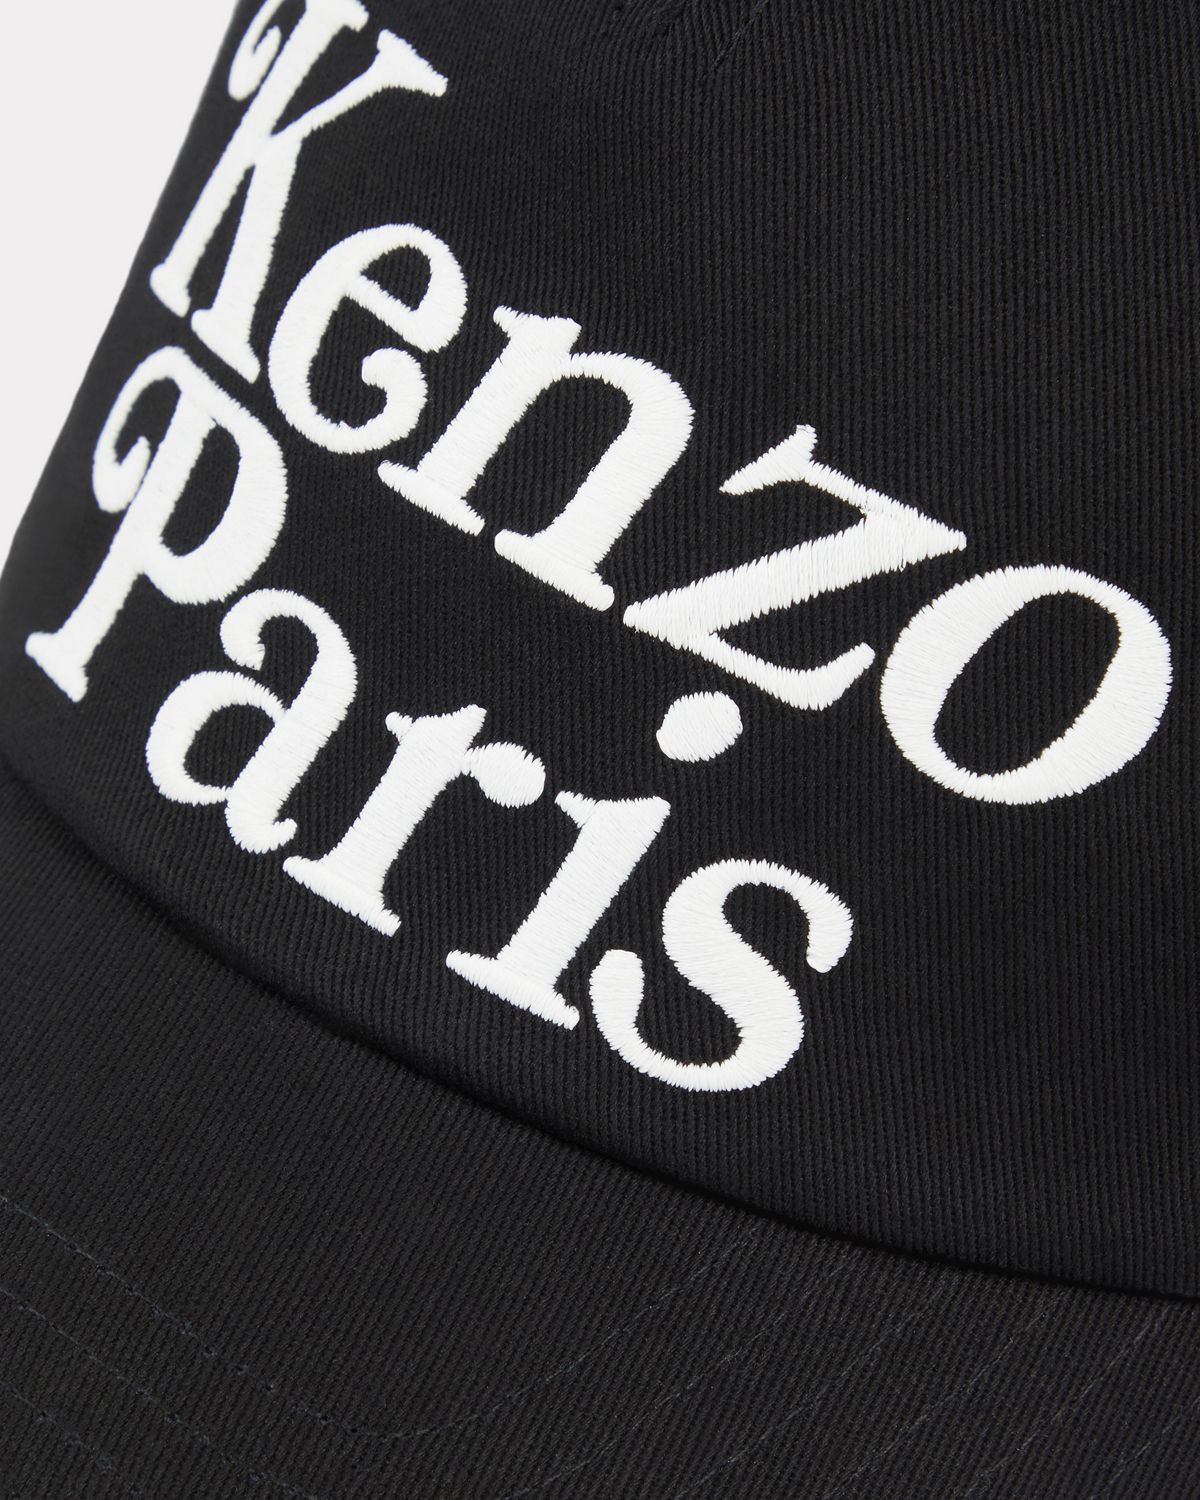 KENZO - 【ラスト1点】【限定】 KENZO x VERDY / Cap / ベースボール ...